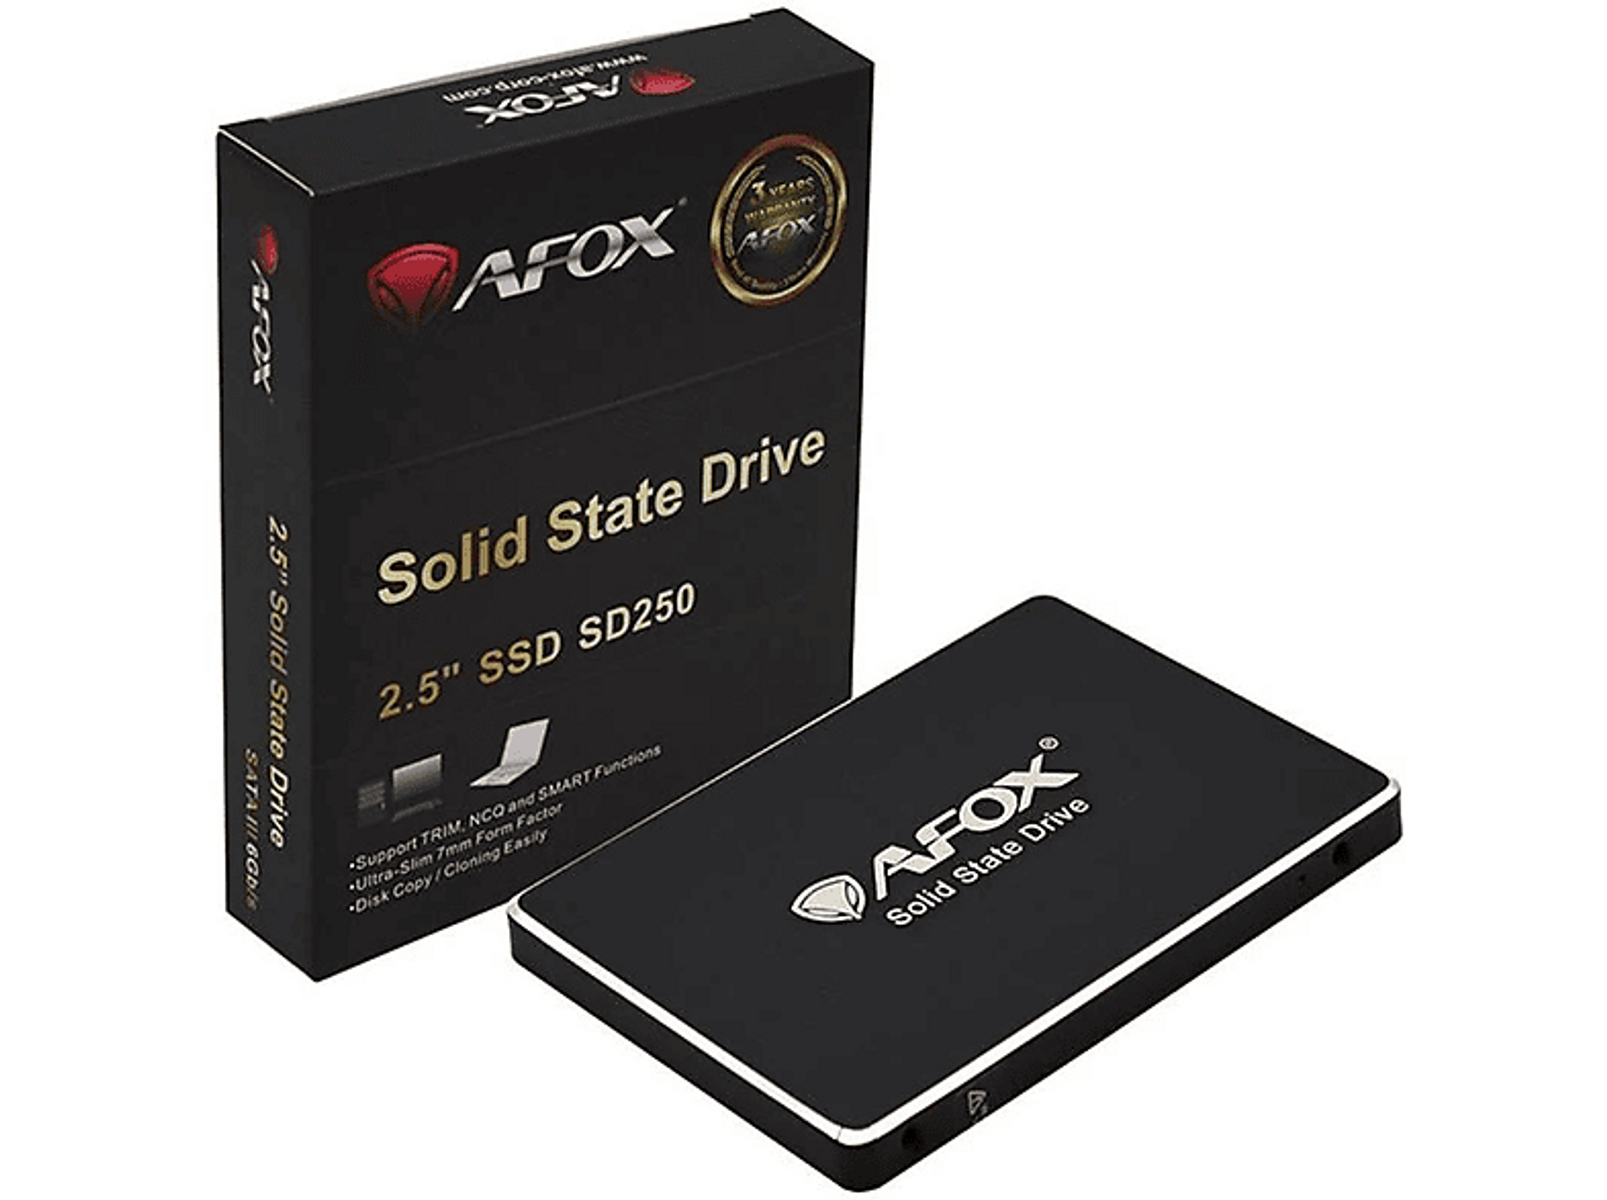 A FOX GB, 2,5 Zoll, SSD, 480 SD250-512GQN, intern &